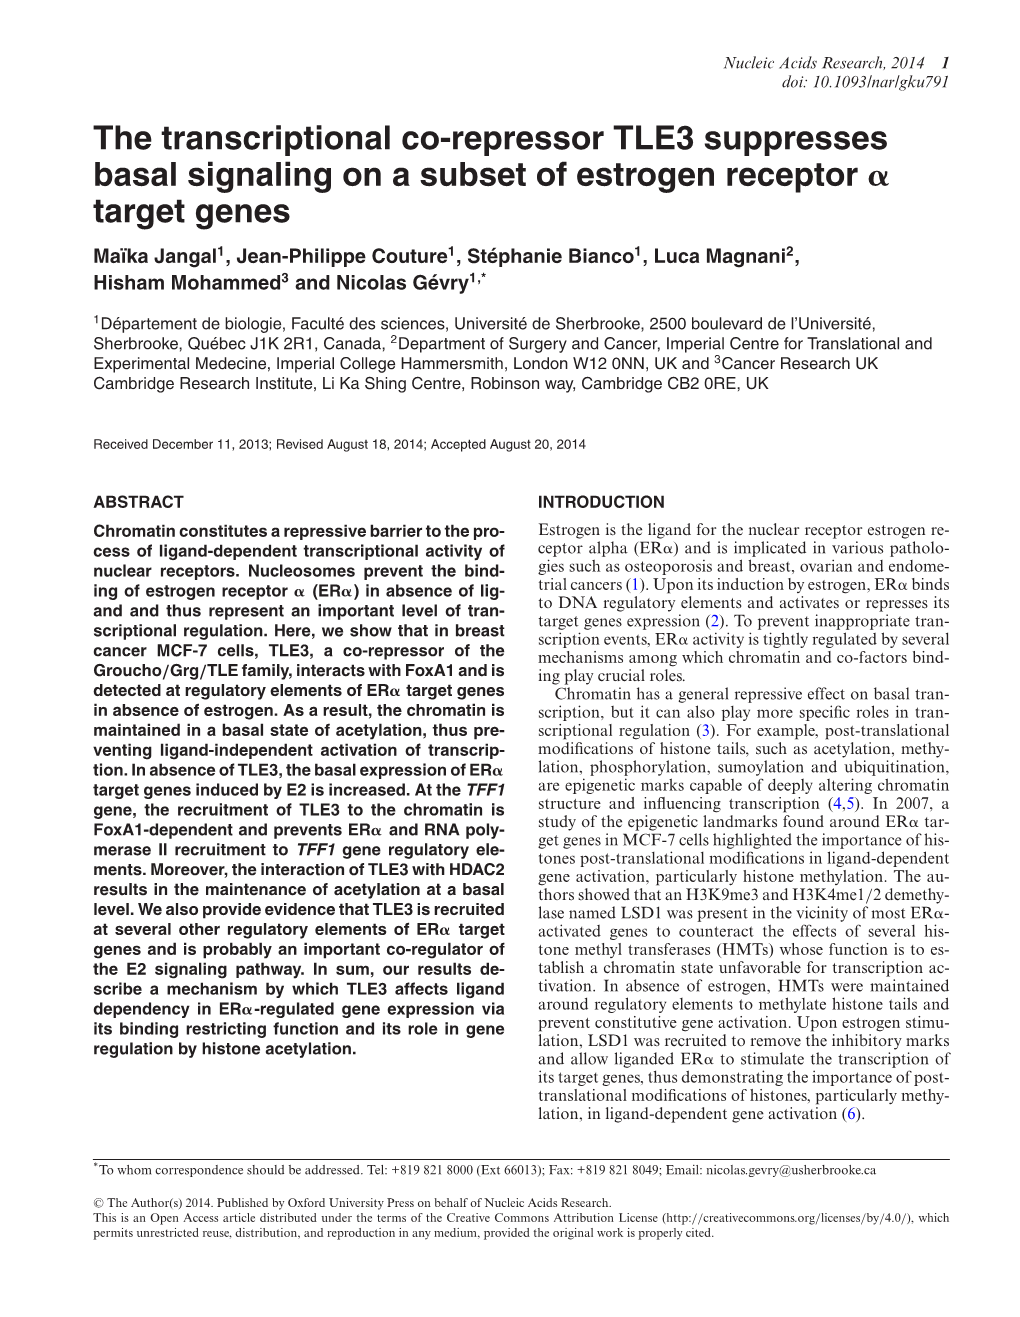 The Transcriptional Co-Repressor TLE3 Suppresses Basal Signaling on A